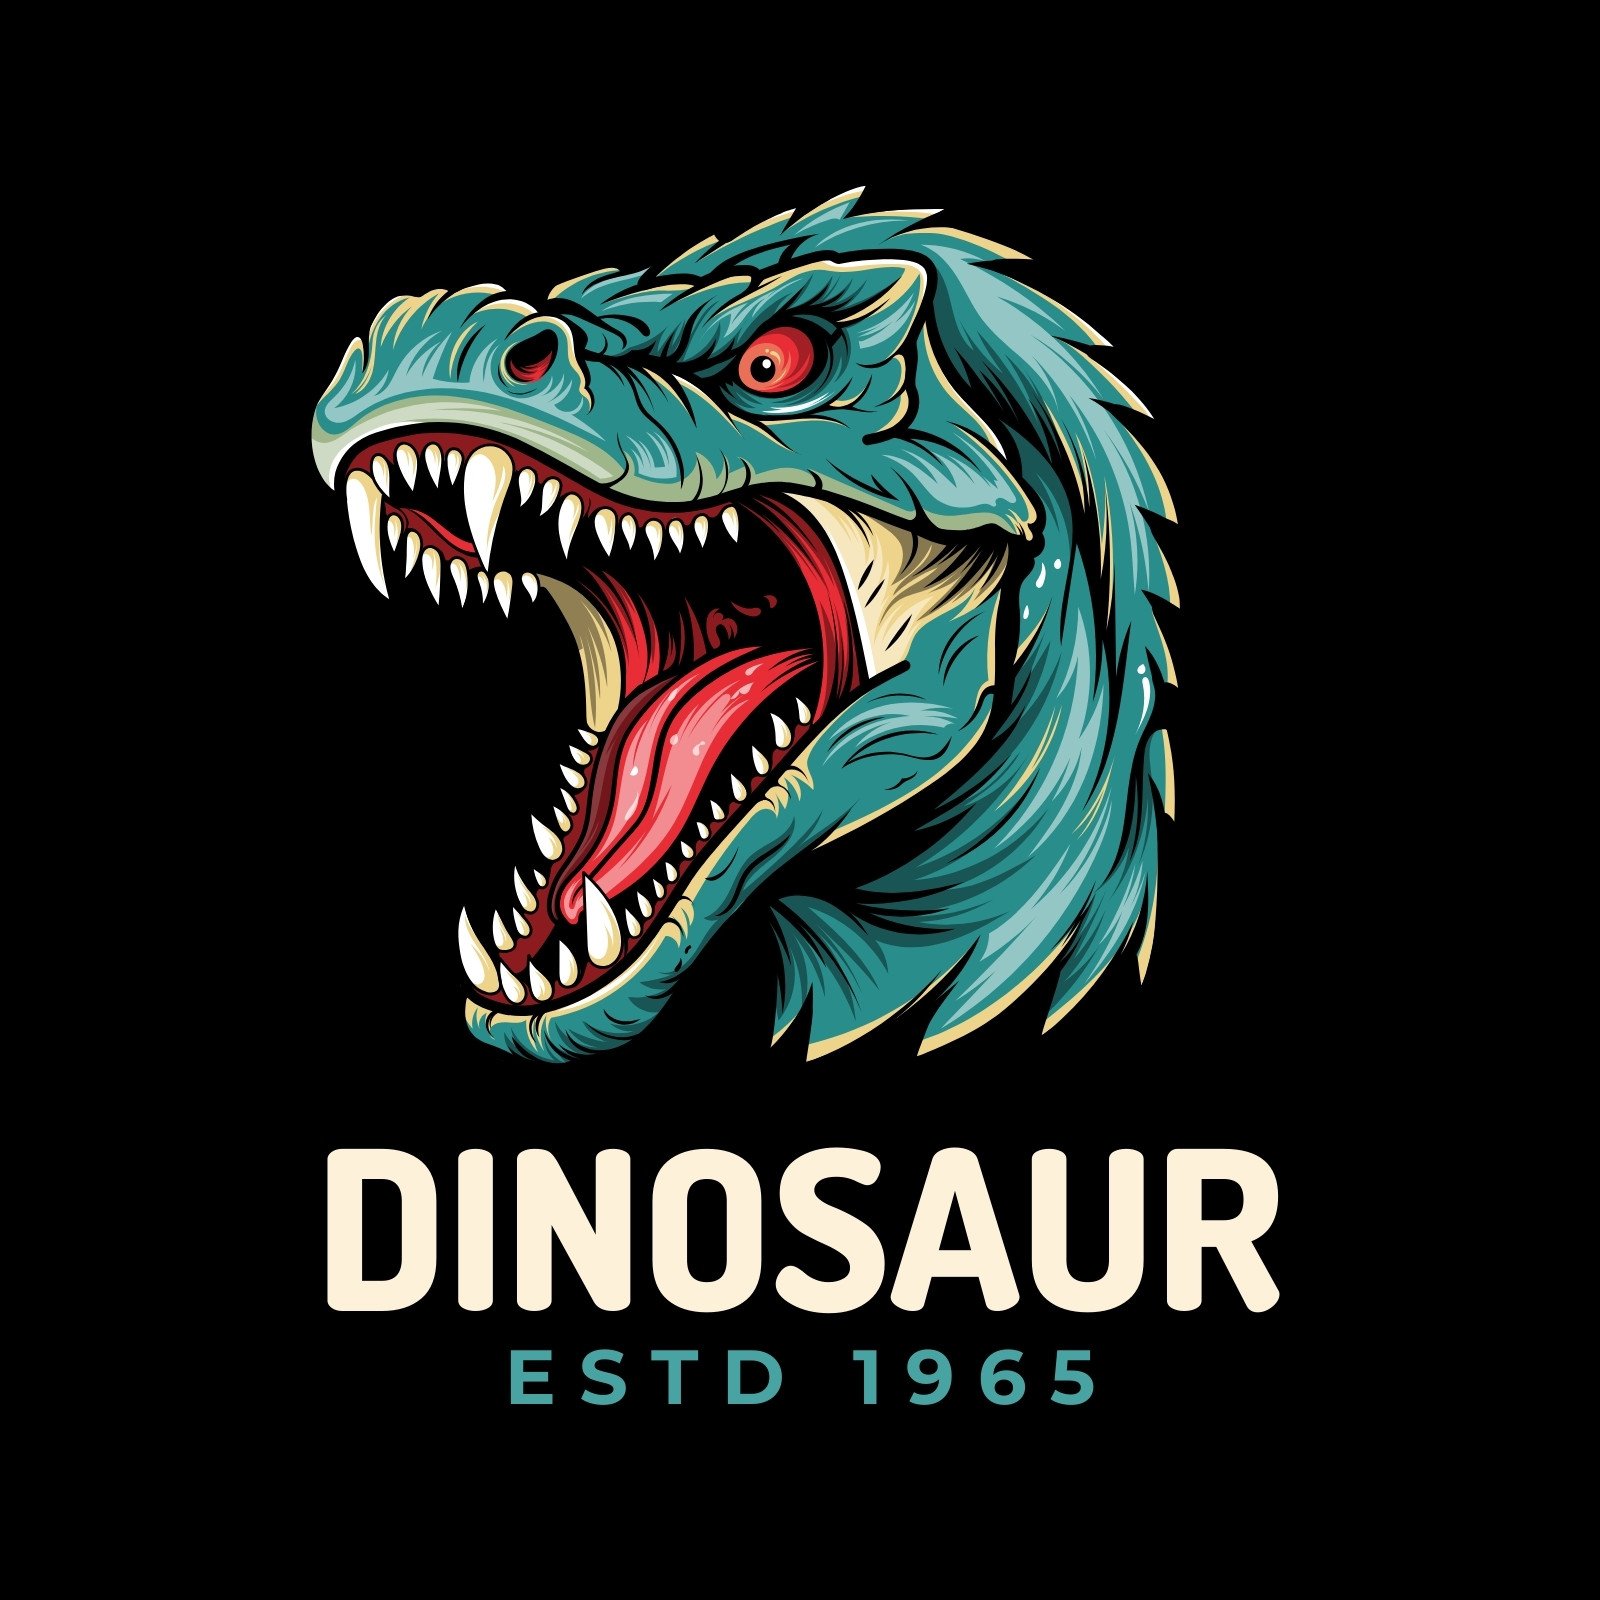 Dinosaur study logo set simple style Royalty Free Vector